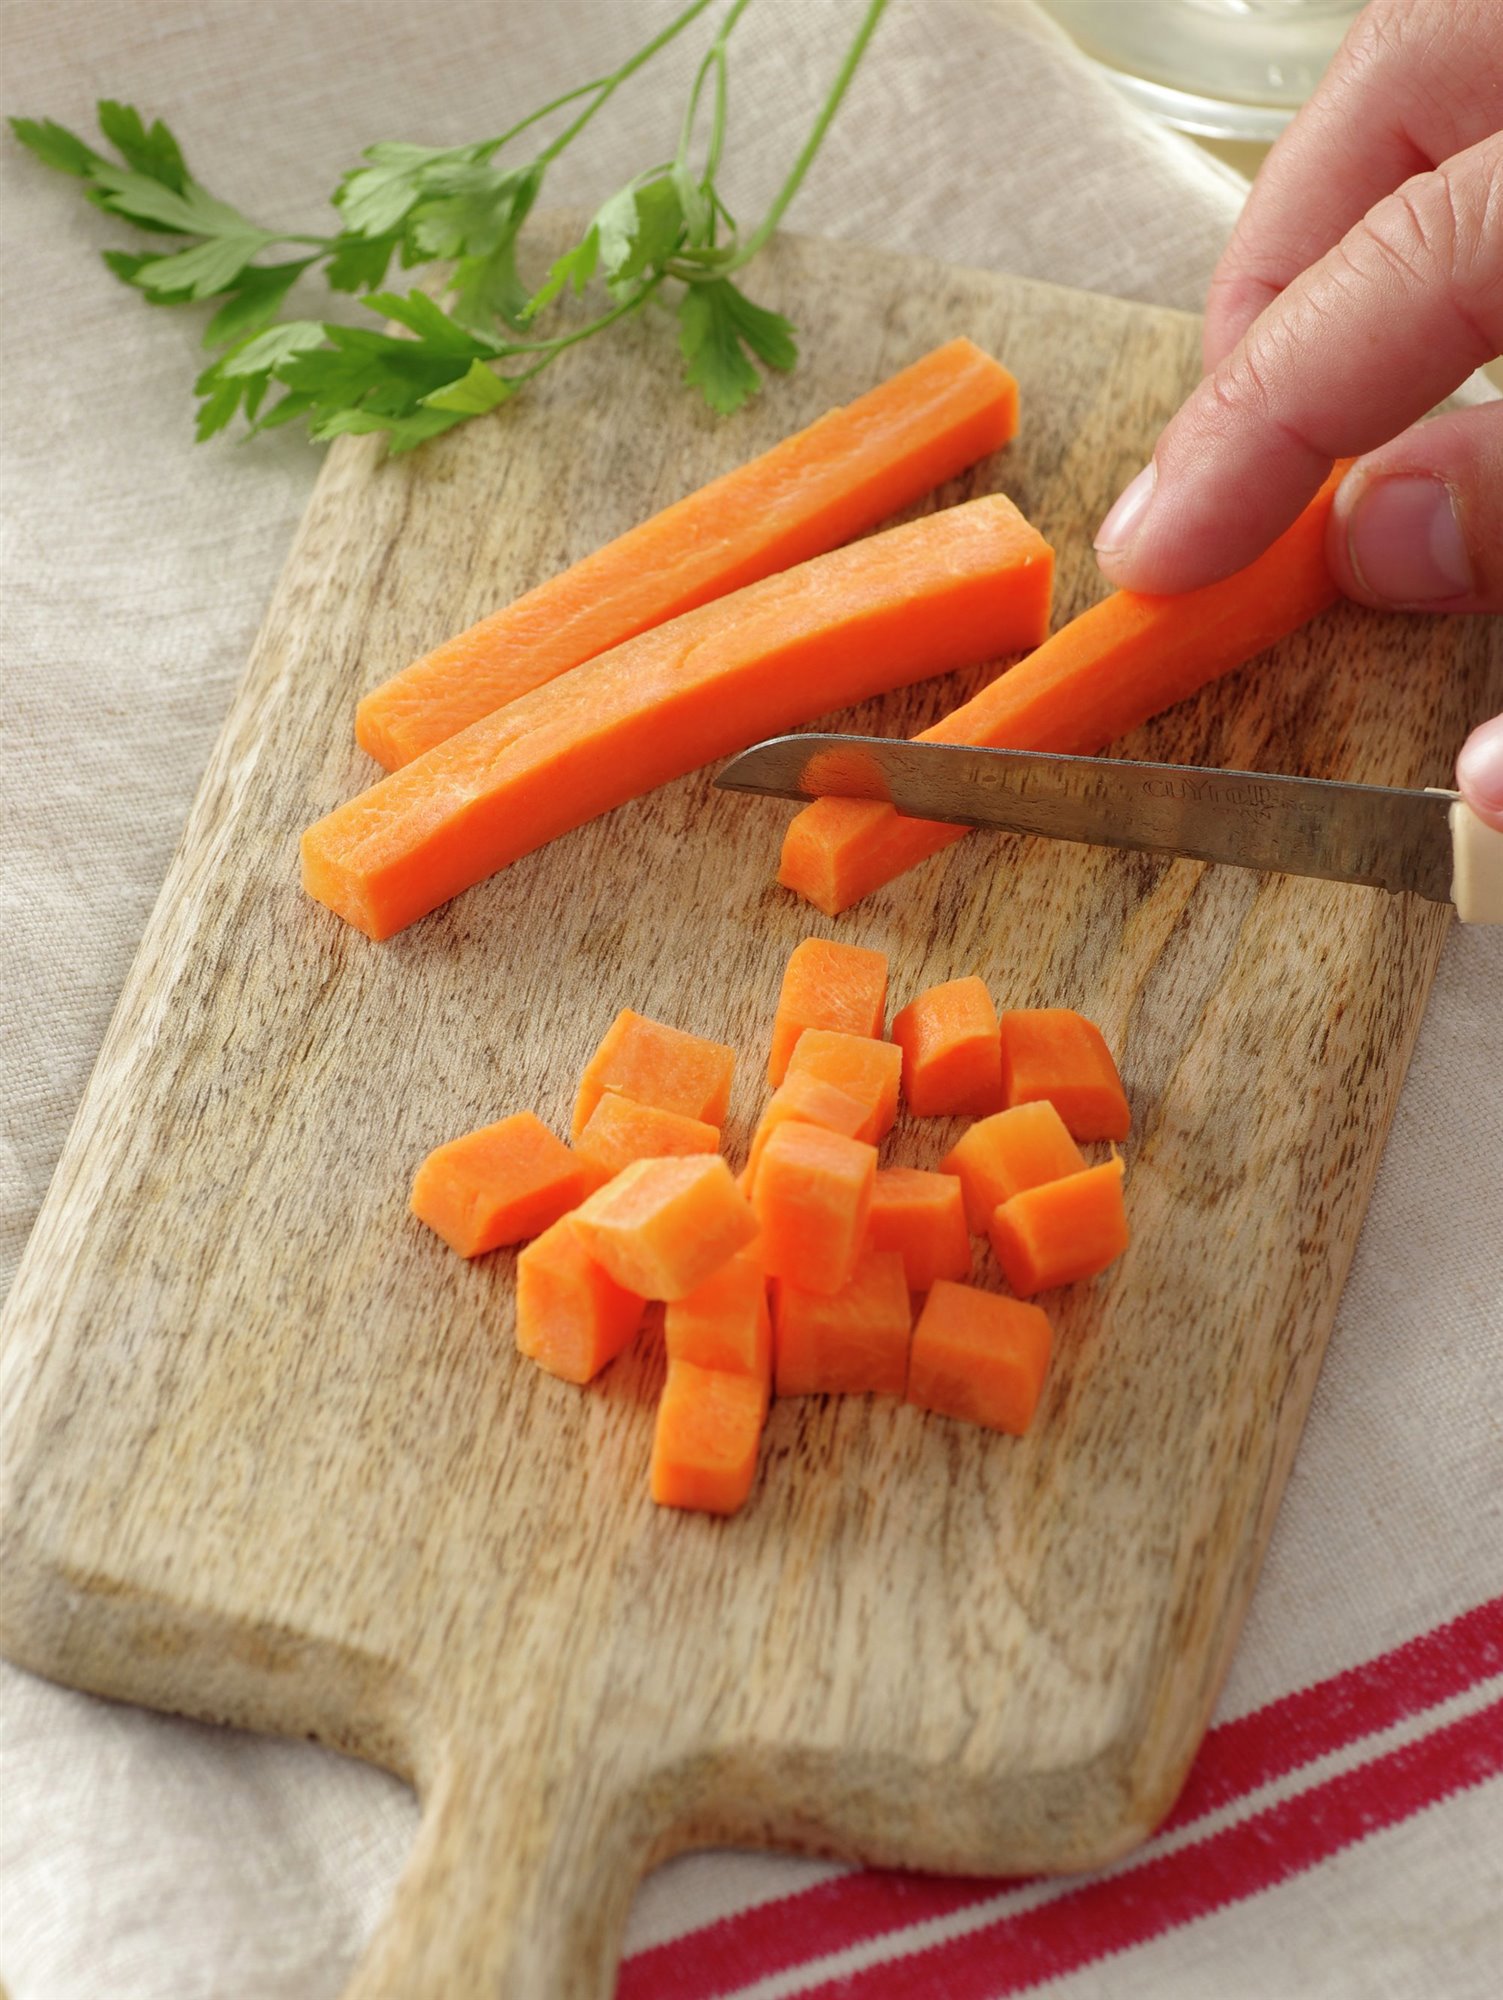 1. Corta las zanahorias